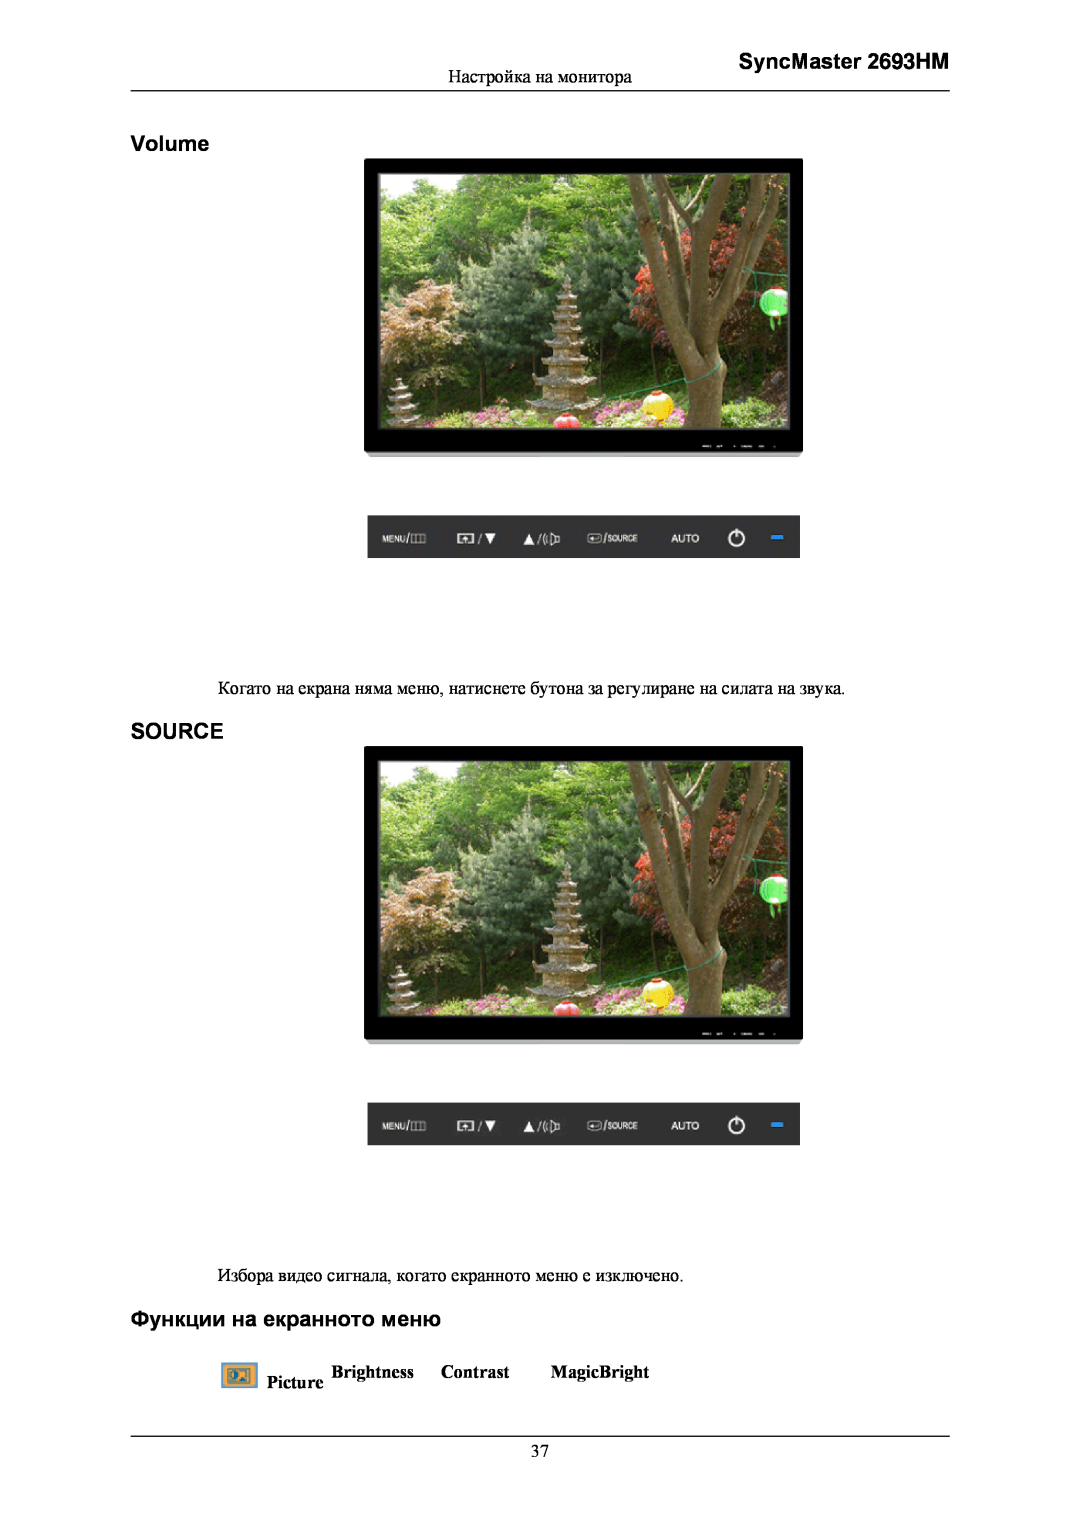 Samsung LS26KIEEFV/EDC manual Volume, Source, Функции на екранното меню, SyncMaster 2693HM, Picture Brightness, Contrast 